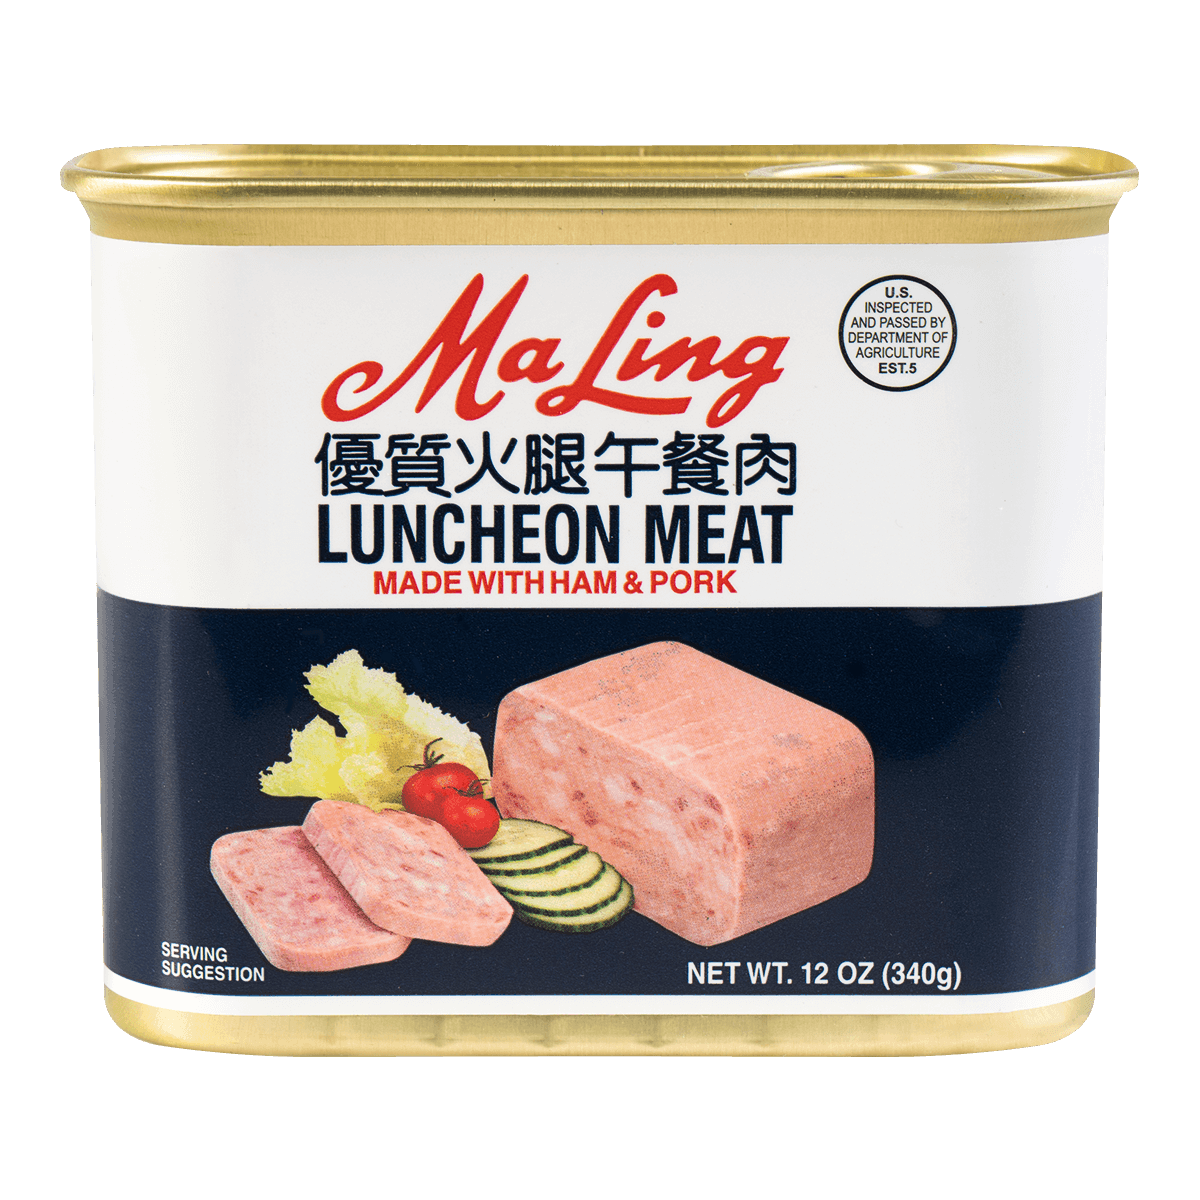 Made for meat. ЛАНЧЕОН меат. Luncheon meat консервы. Pork Luncheon meat. Luncheon meat китайский.